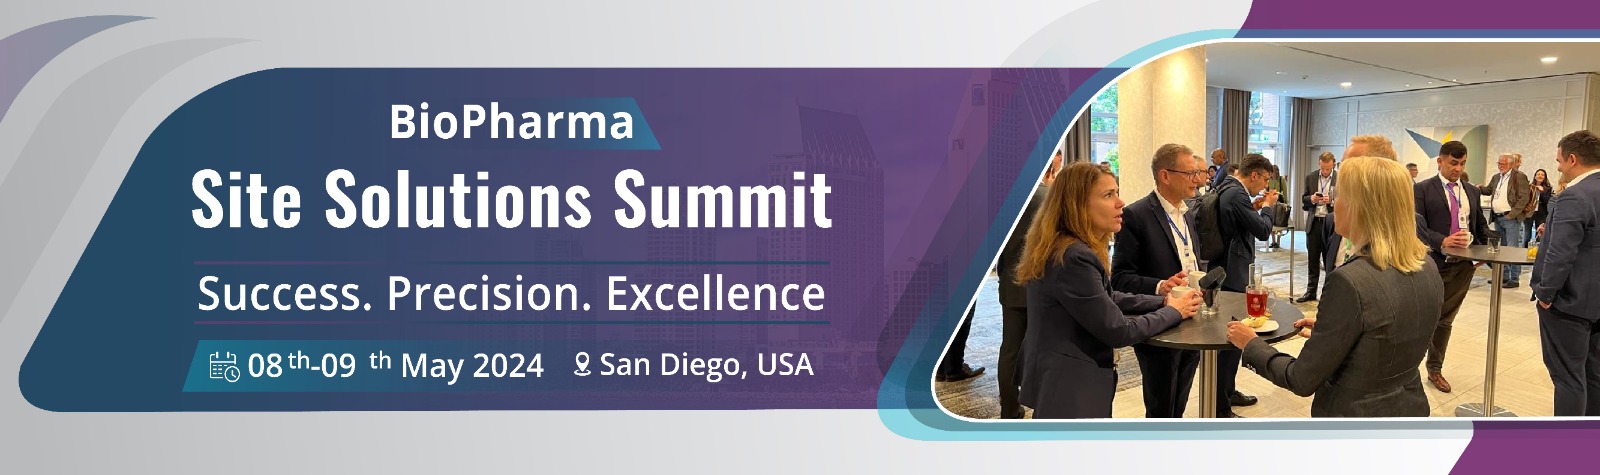 BioPharma Site Solutions Summit 2024, San Diego, California, United States